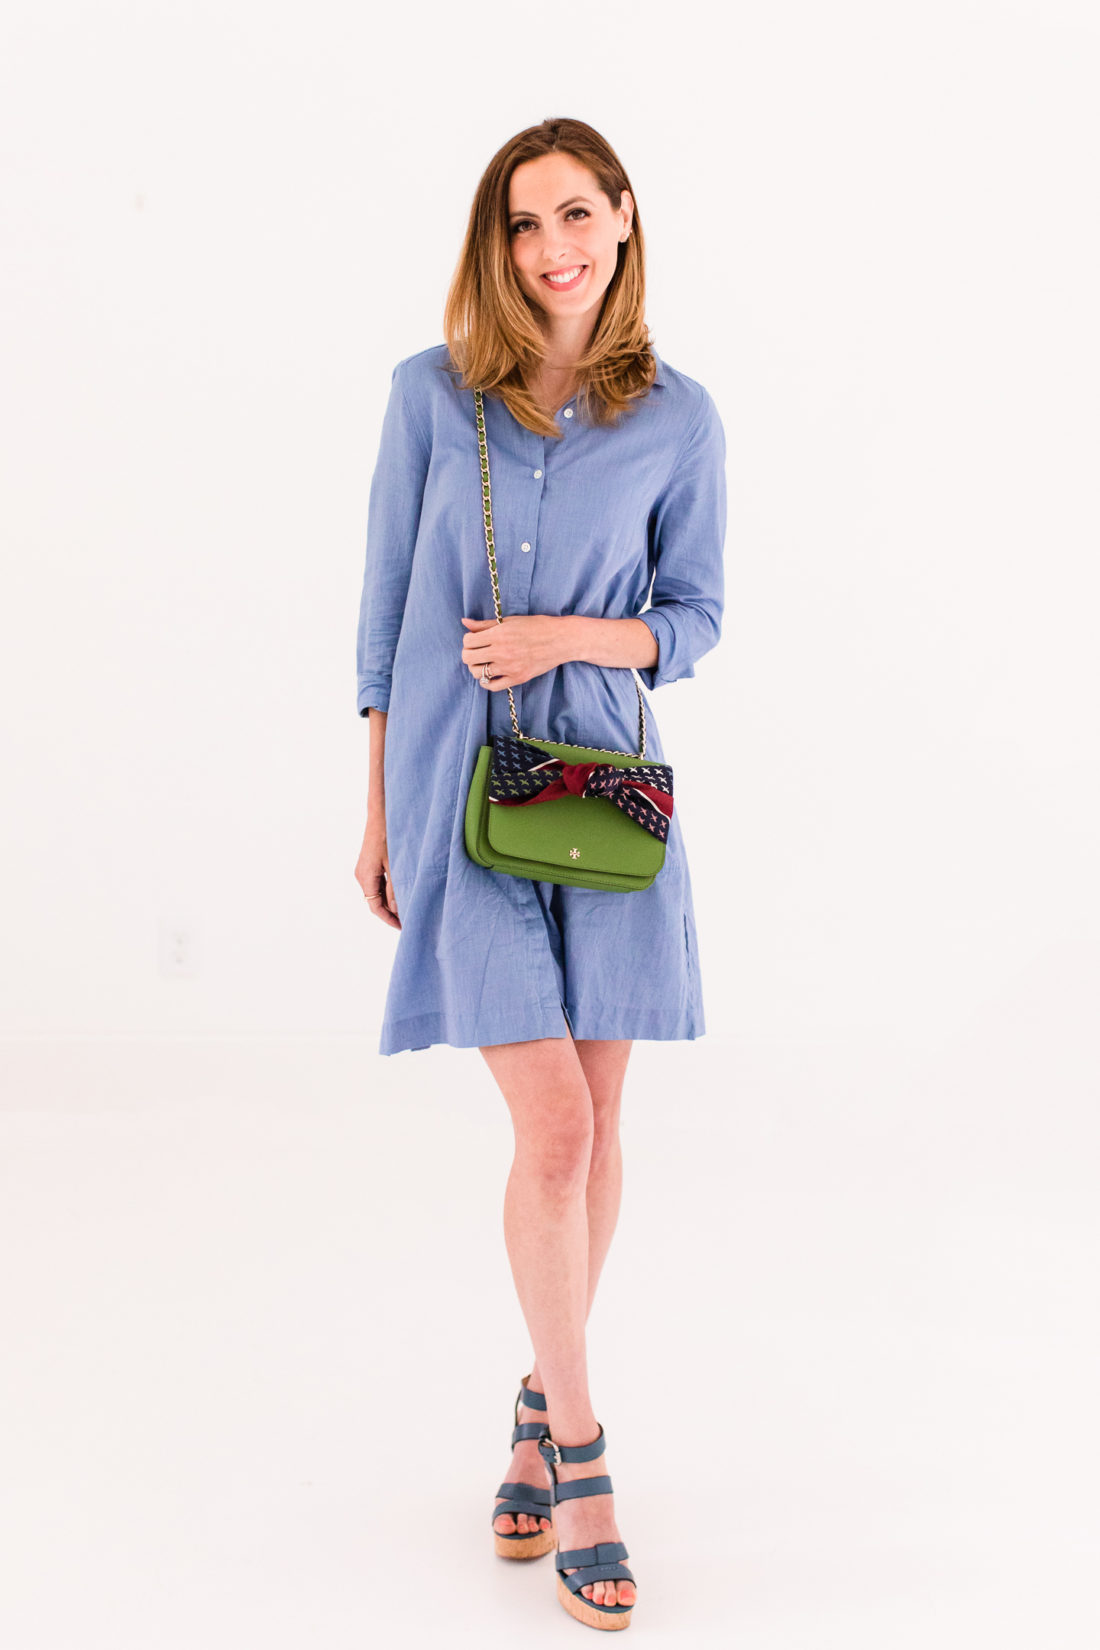 Eva Amurri Martino wears a blue shirt dress and styles a silk scarf to adorn her green tory burch bag